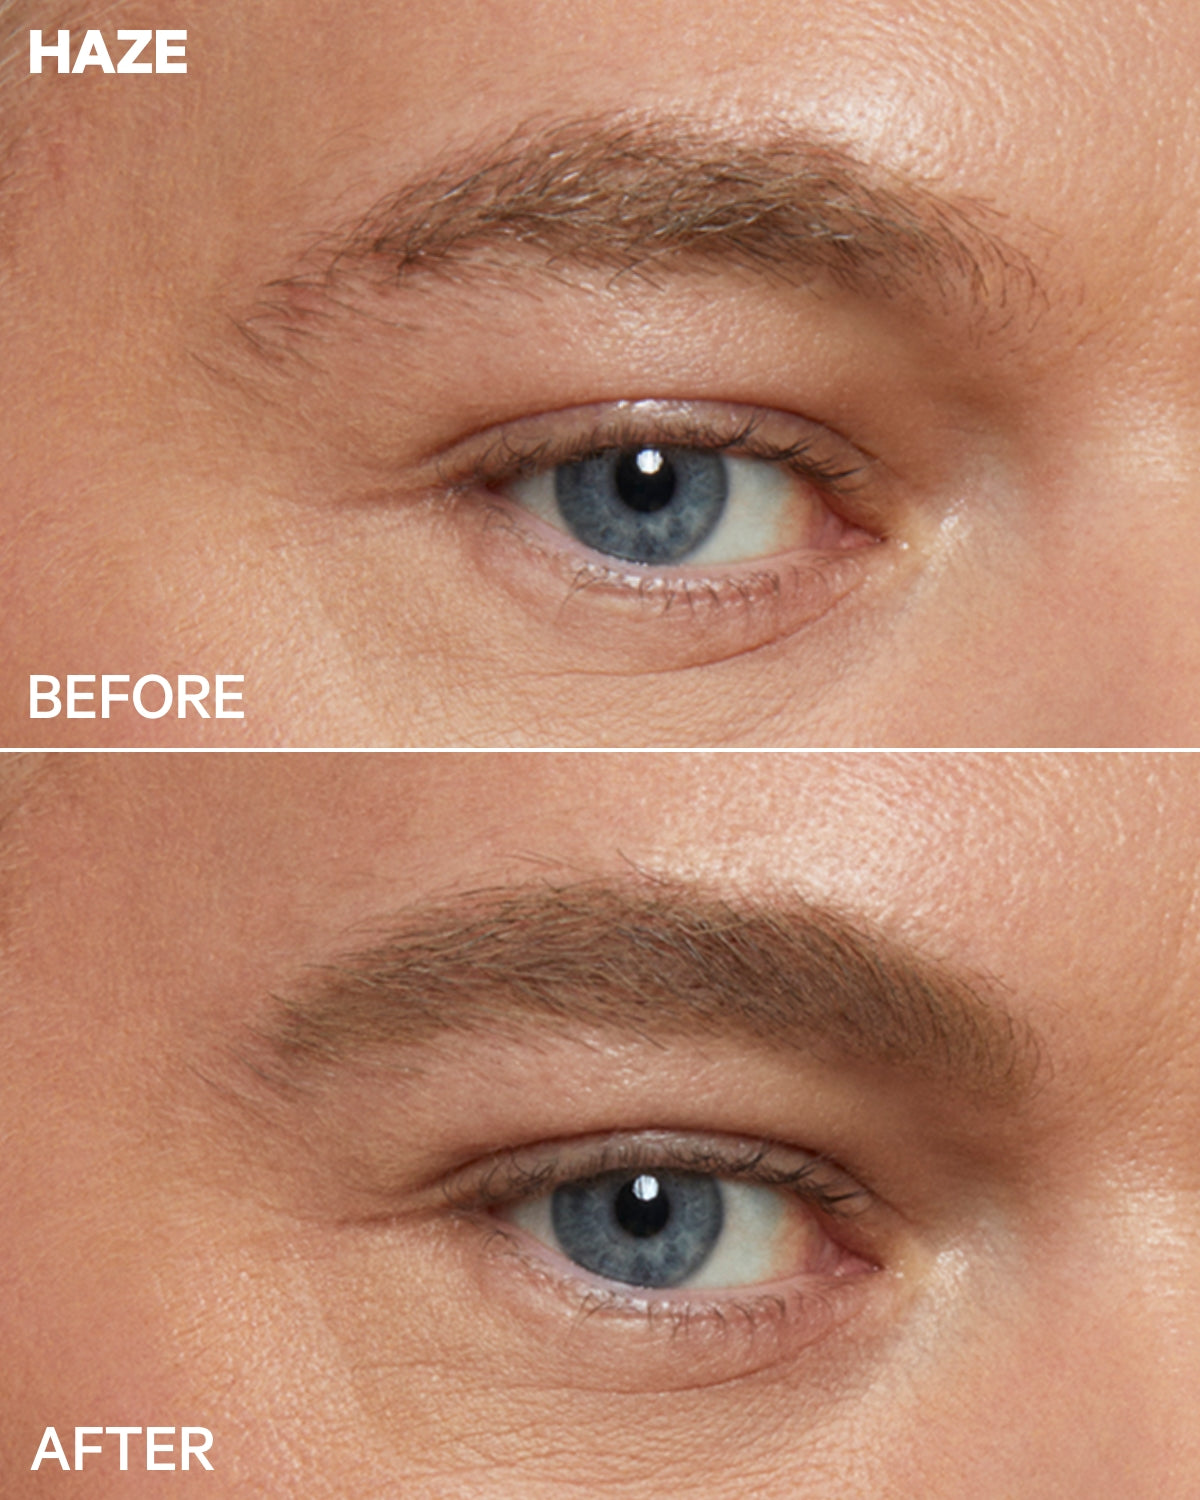 KUSH Brow Shadow Stick Waterproof Eyebrow Pencil Haze Before and After Philip | Milk Makeup